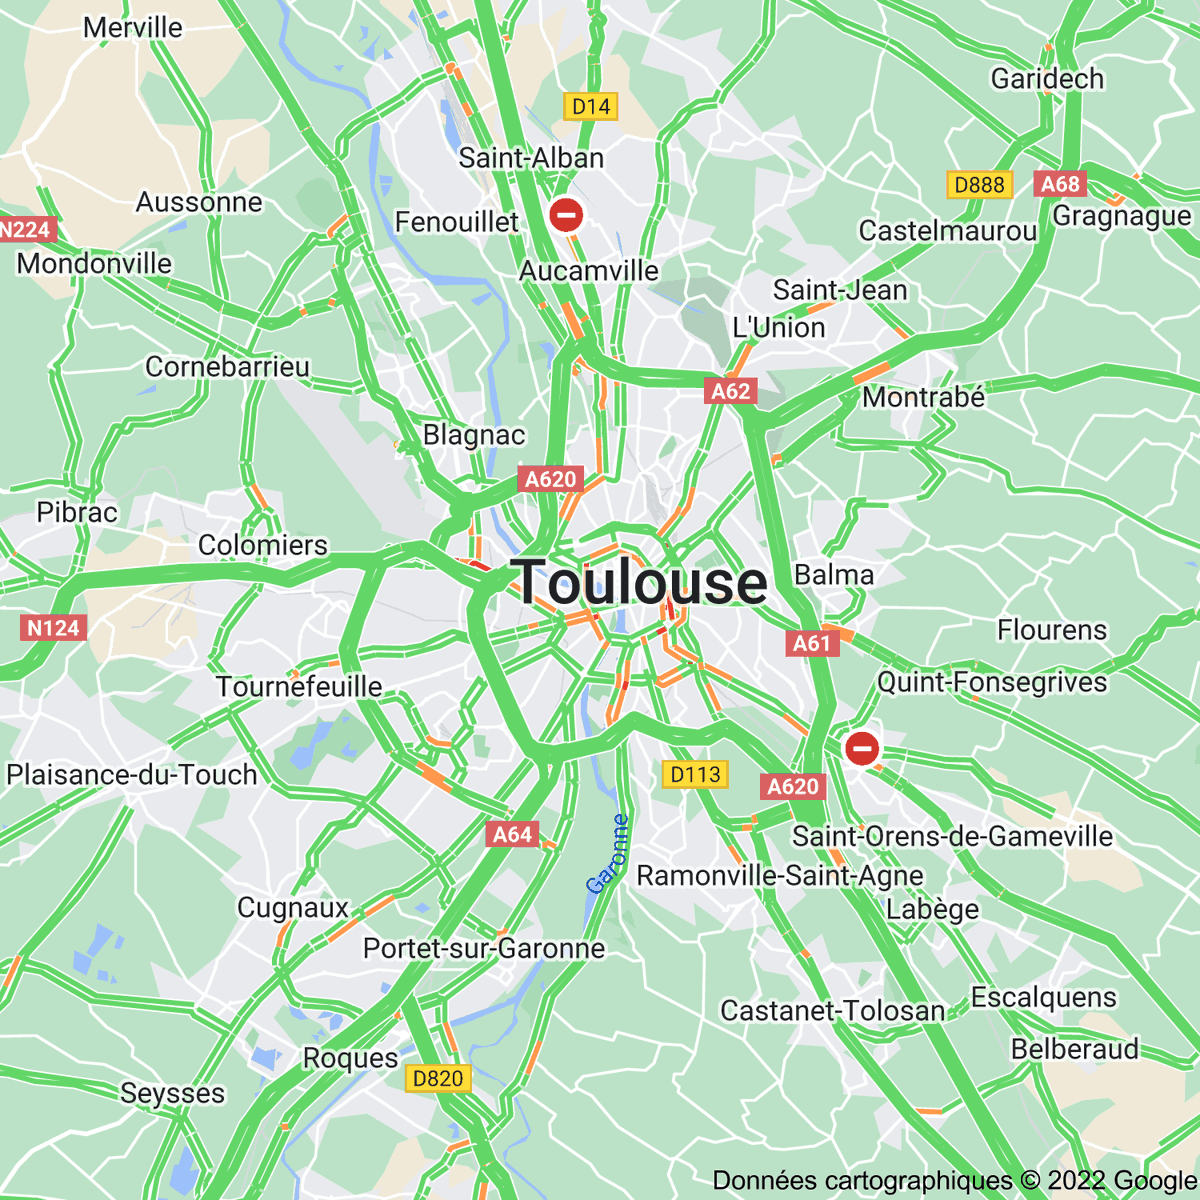 [FLASH 14:30] Trafic à Toulouse toulousetrafic.com #Toulouse #ToulousePeriph #InfoTrafic